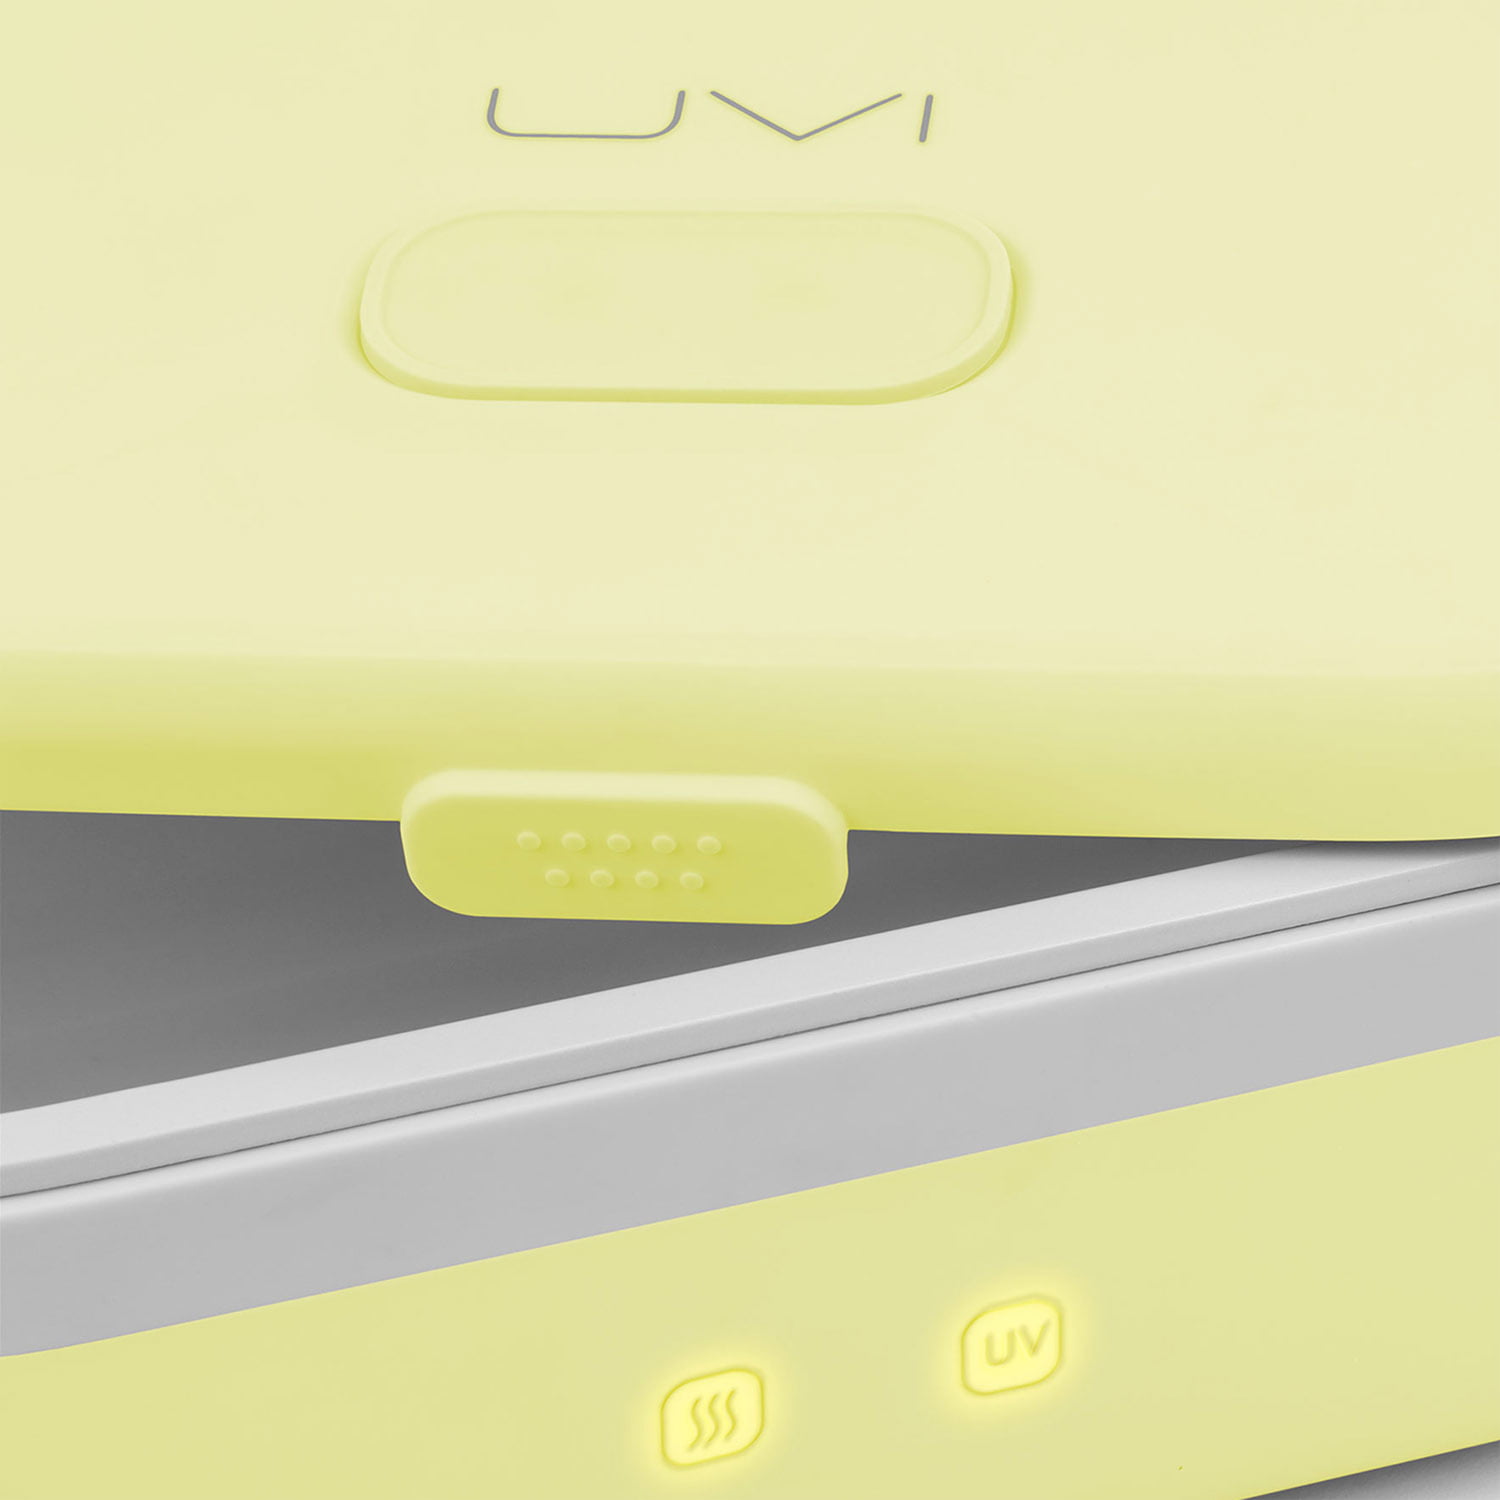 UVI - Portable Self Heating Lunch Box with Odor Killing UV Light Sanitizer,  32 oz, Yellow